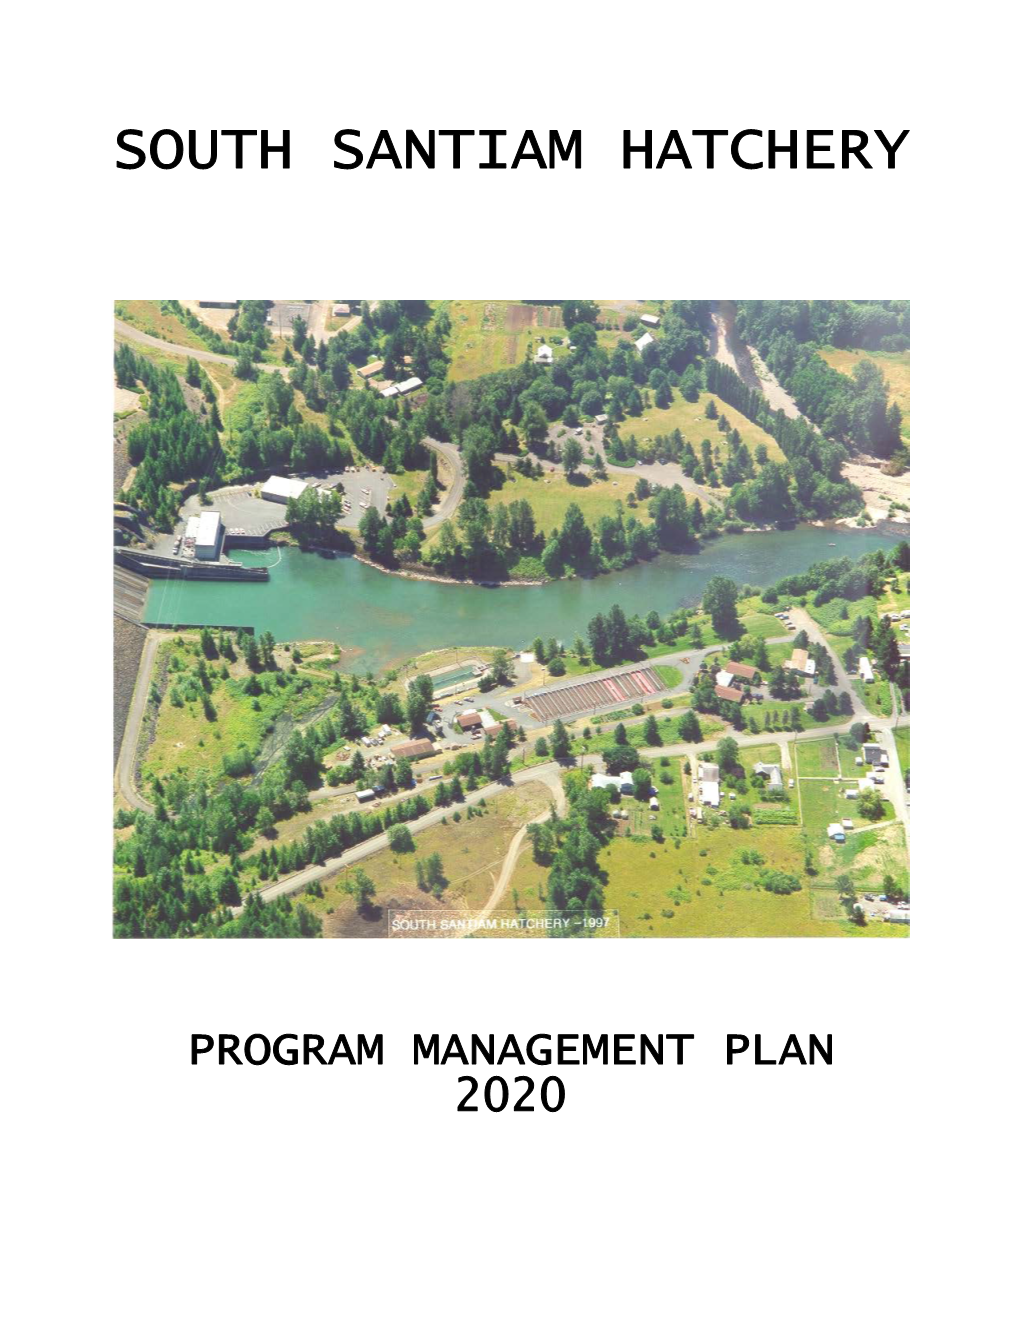 South Santiam Hatchery